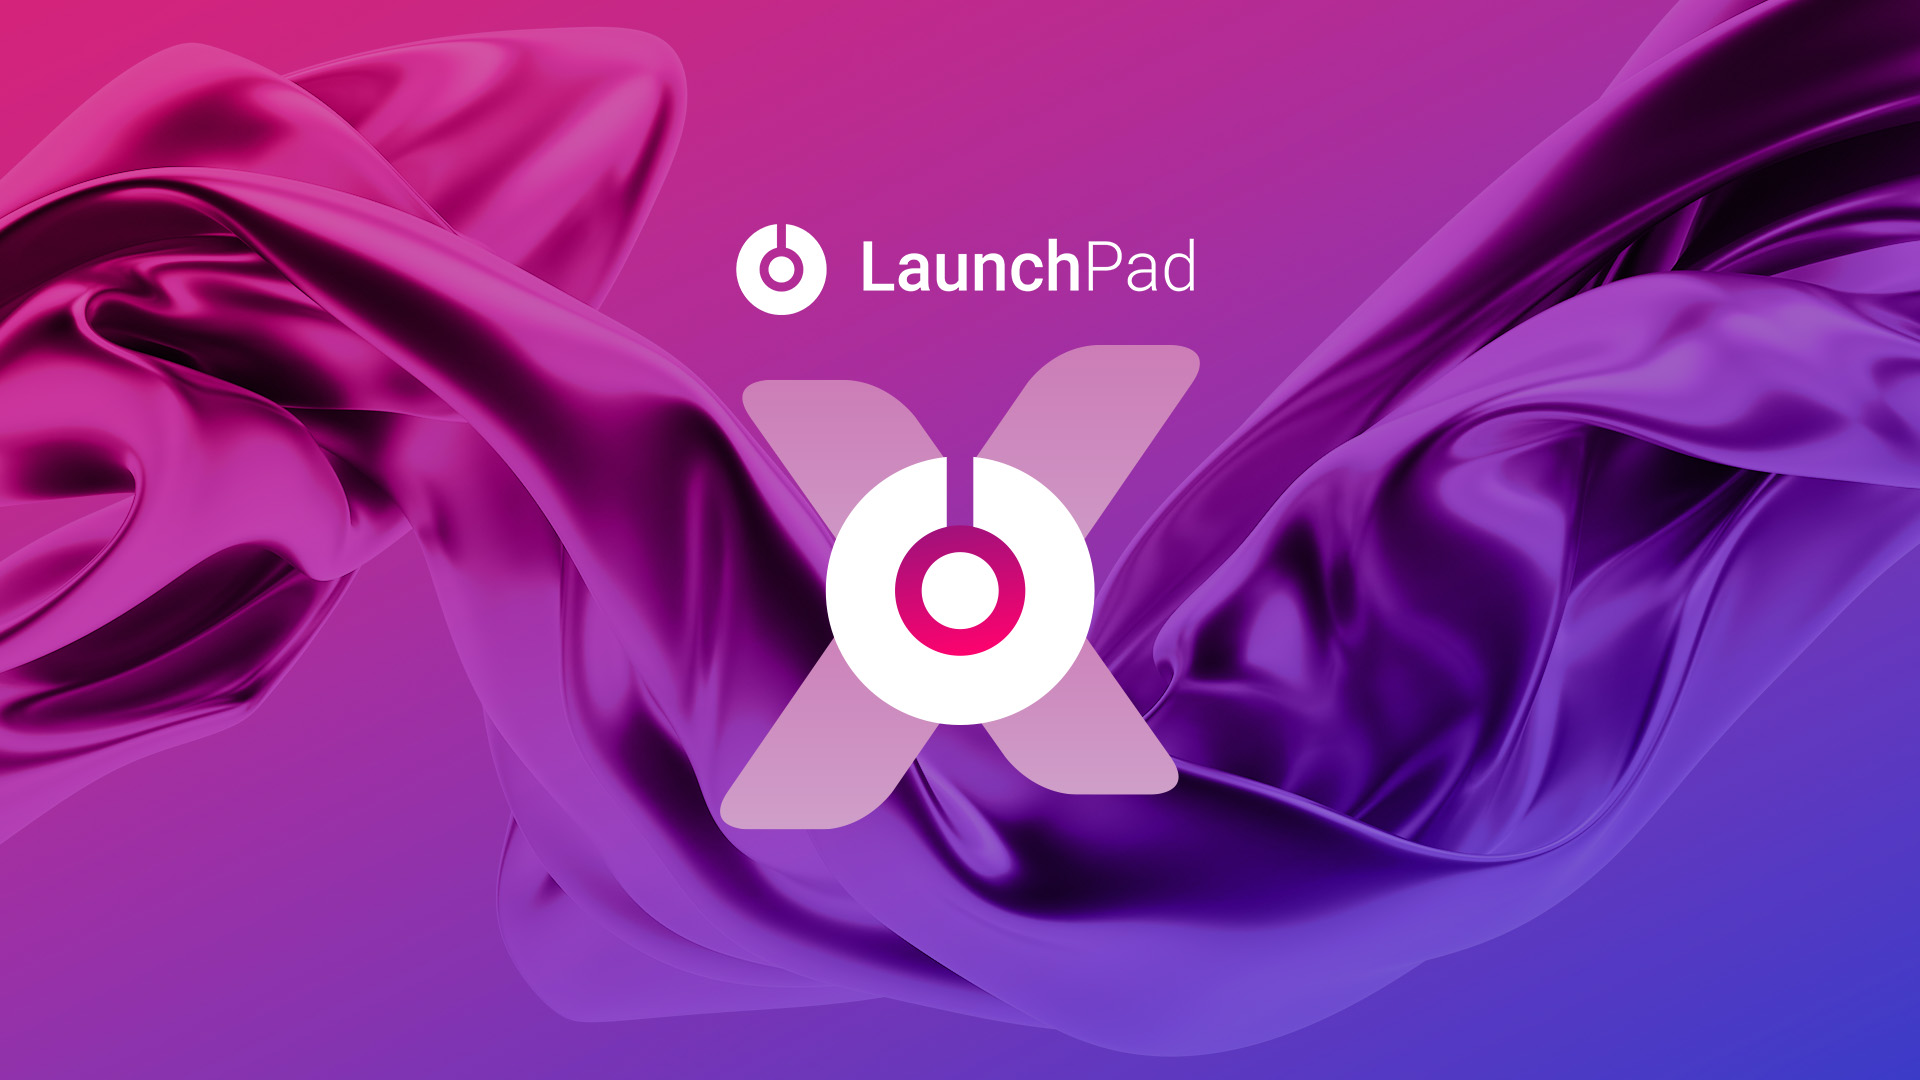 launchpad logo on purple background